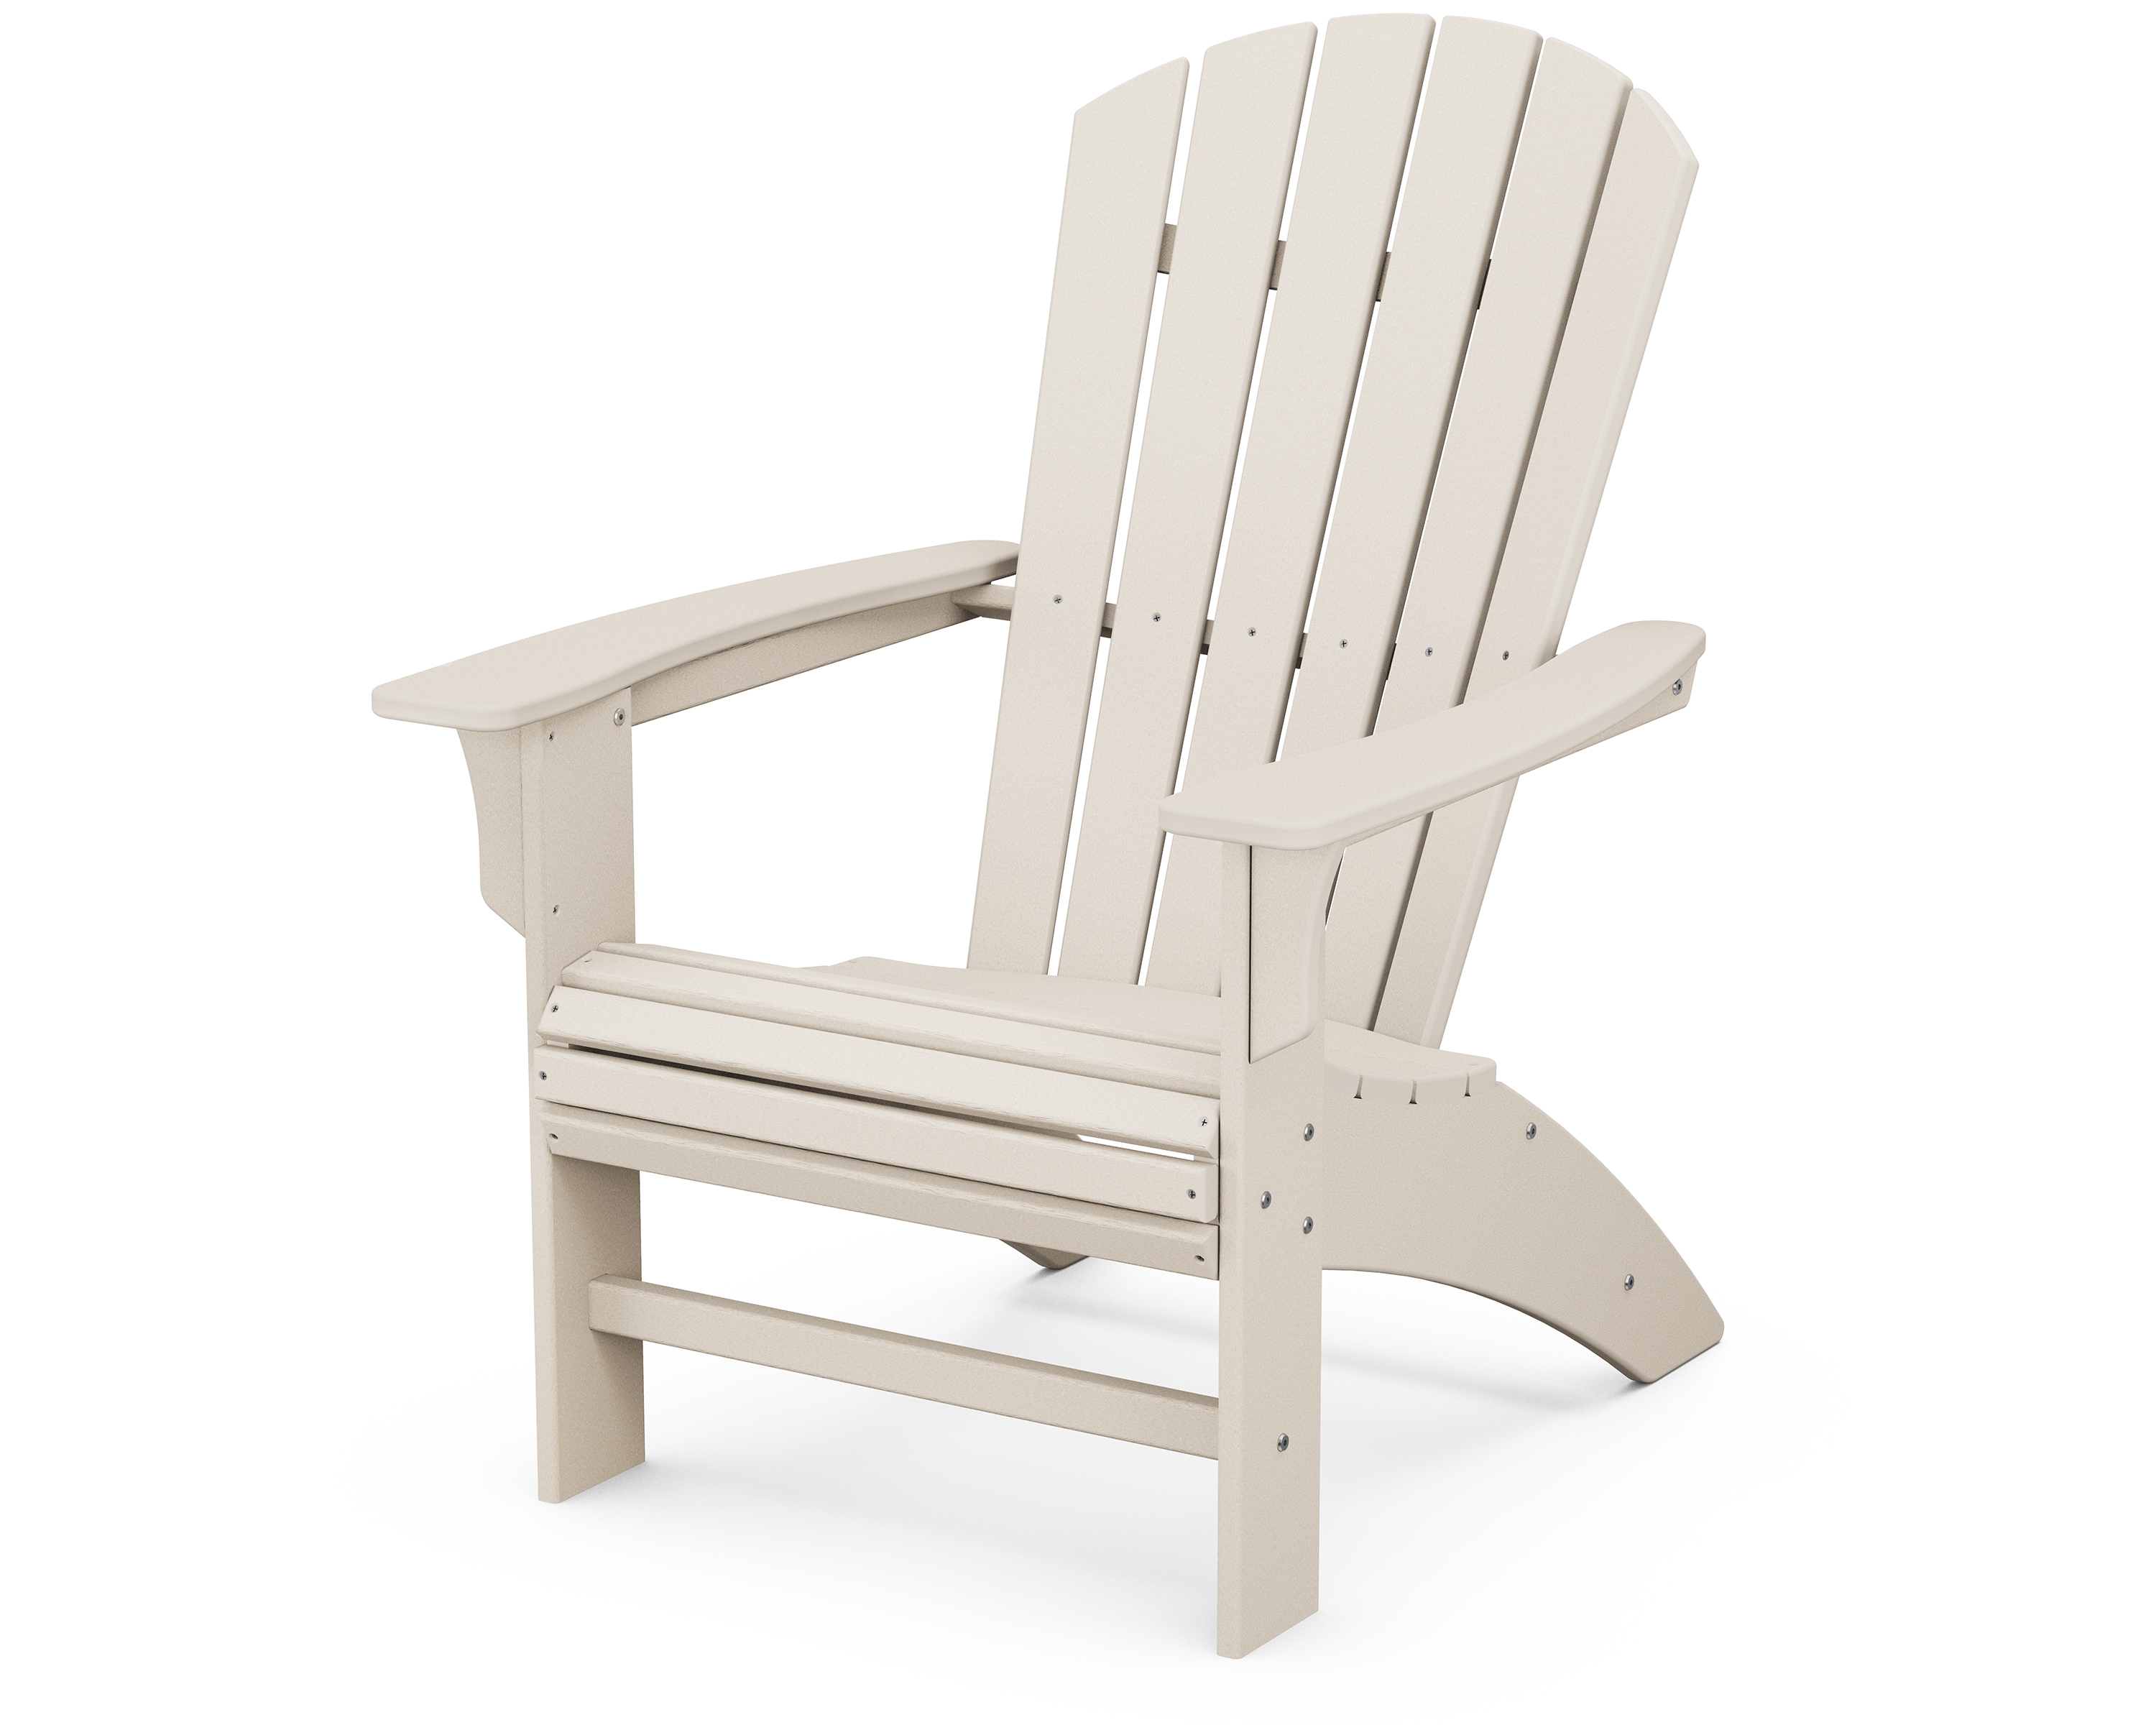 The Fanback Adirondack Chair